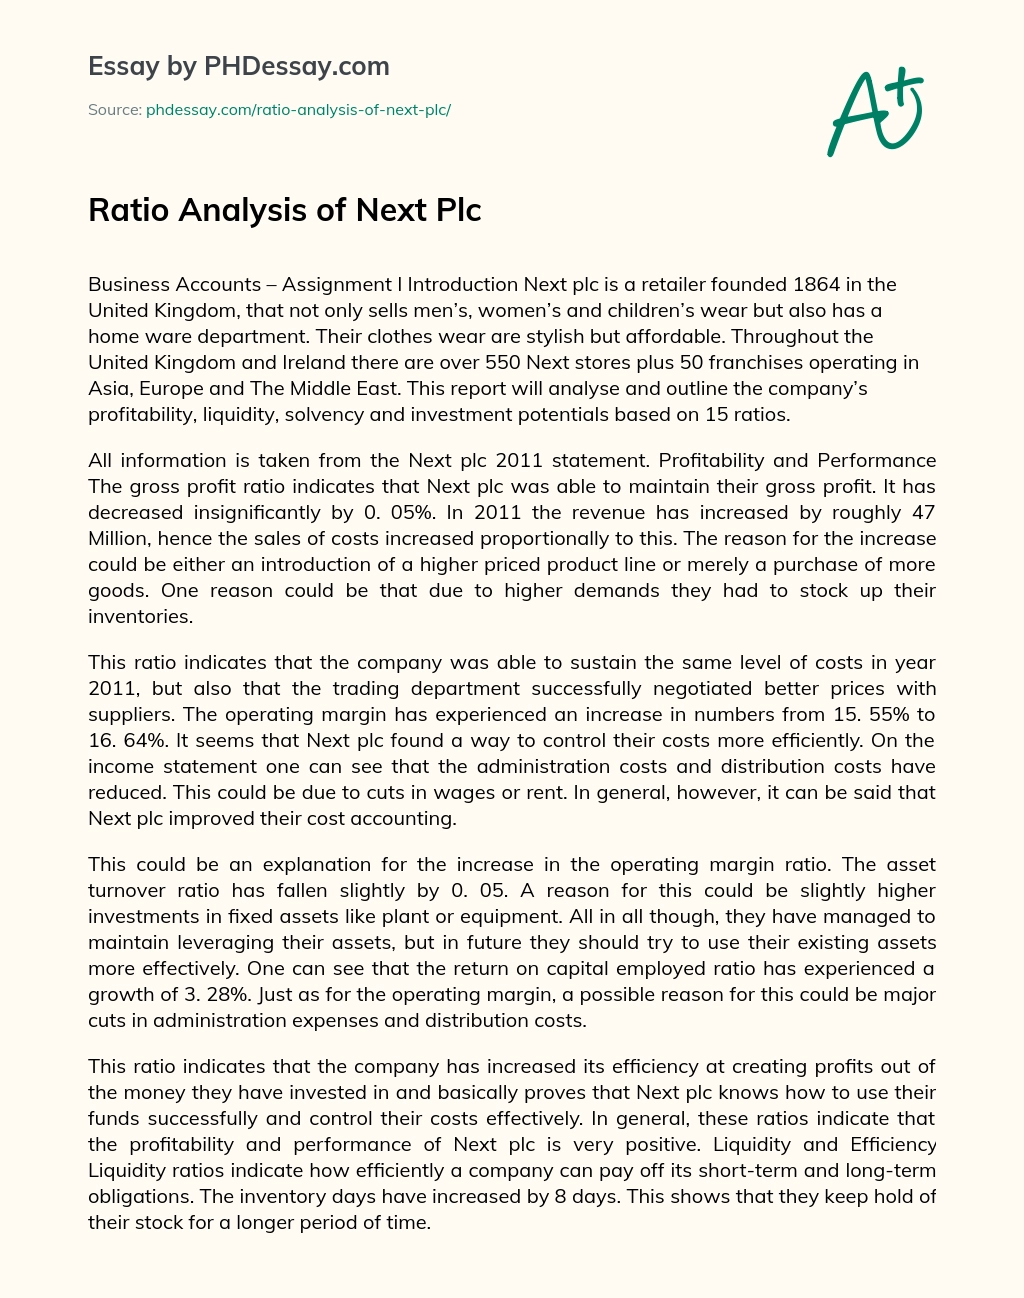 Ratio Analysis of Next Plc essay